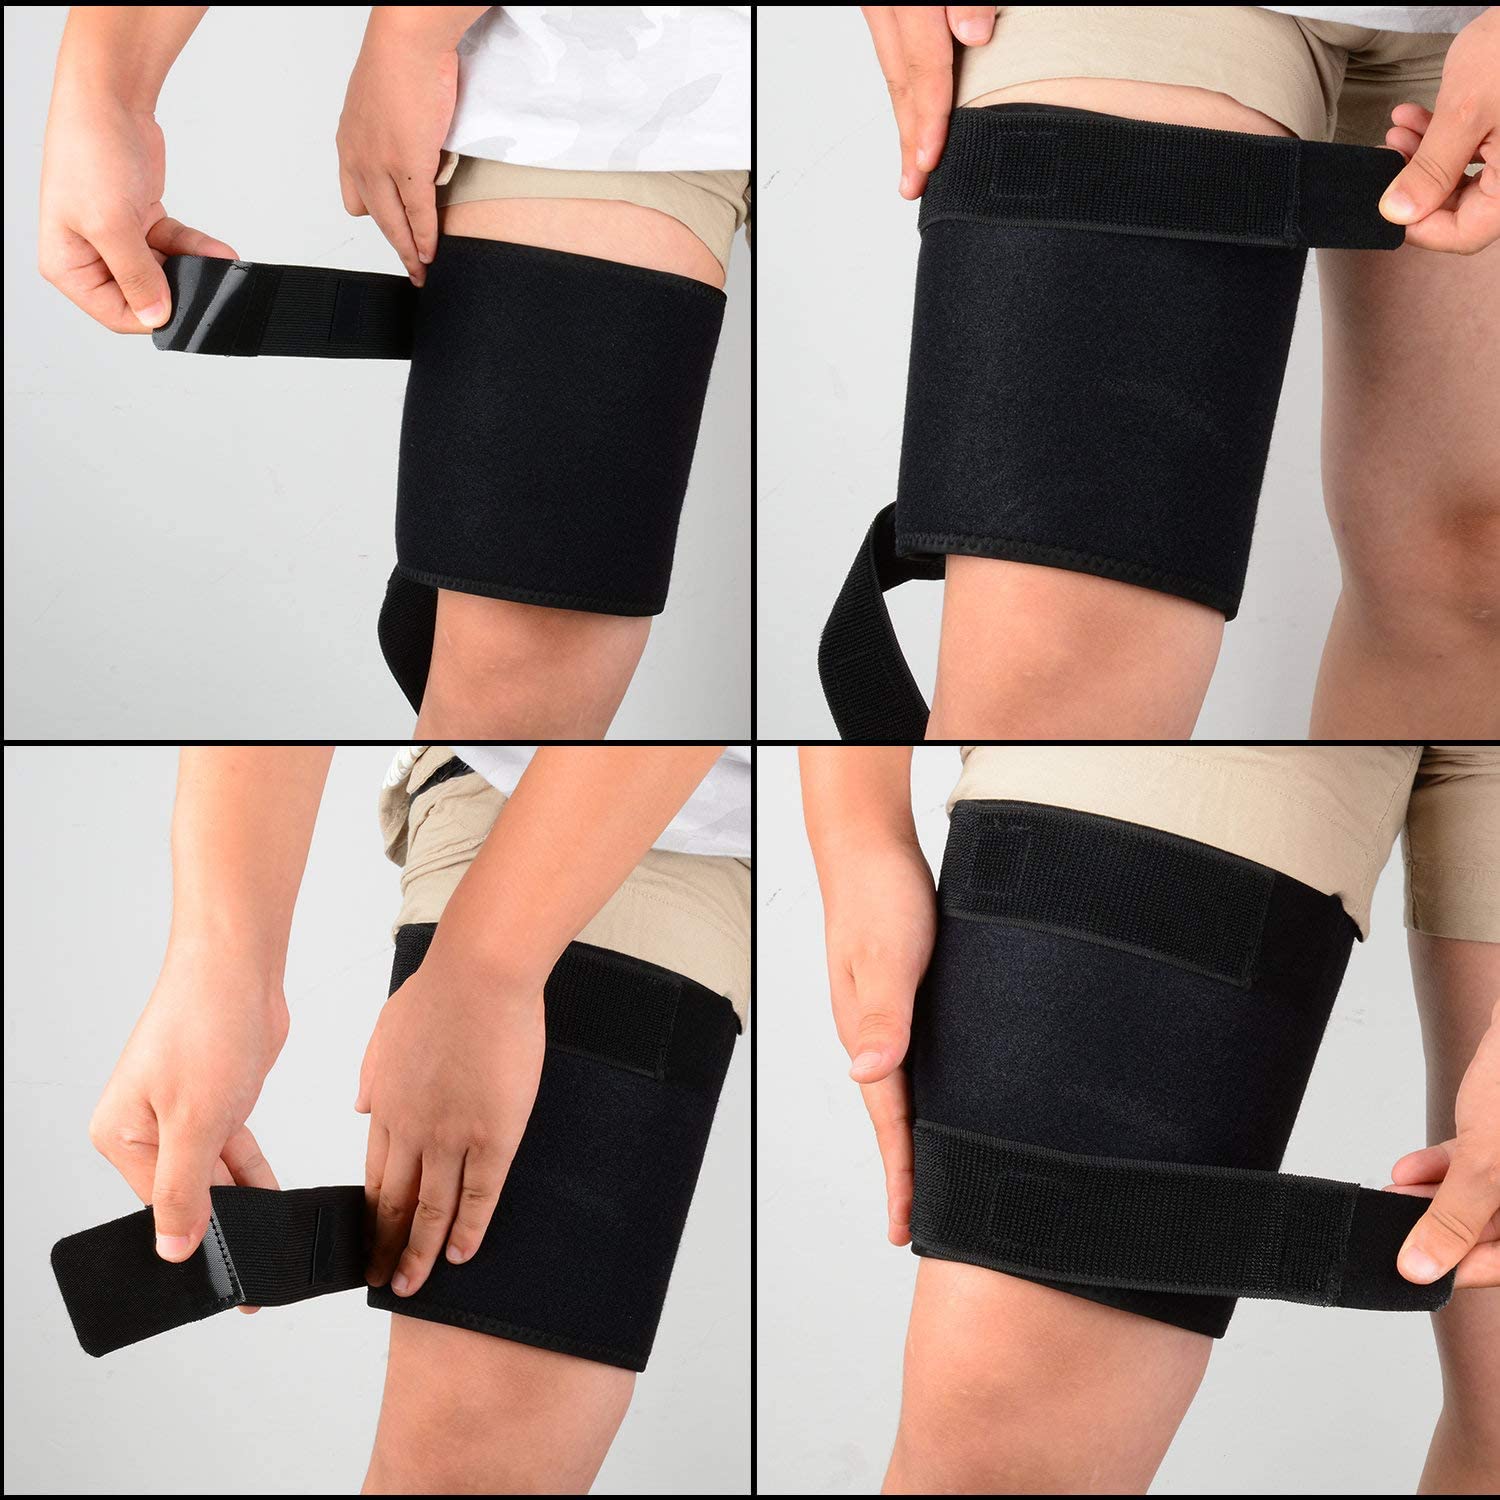 Adjustable Thigh Brace Support – SupreGear